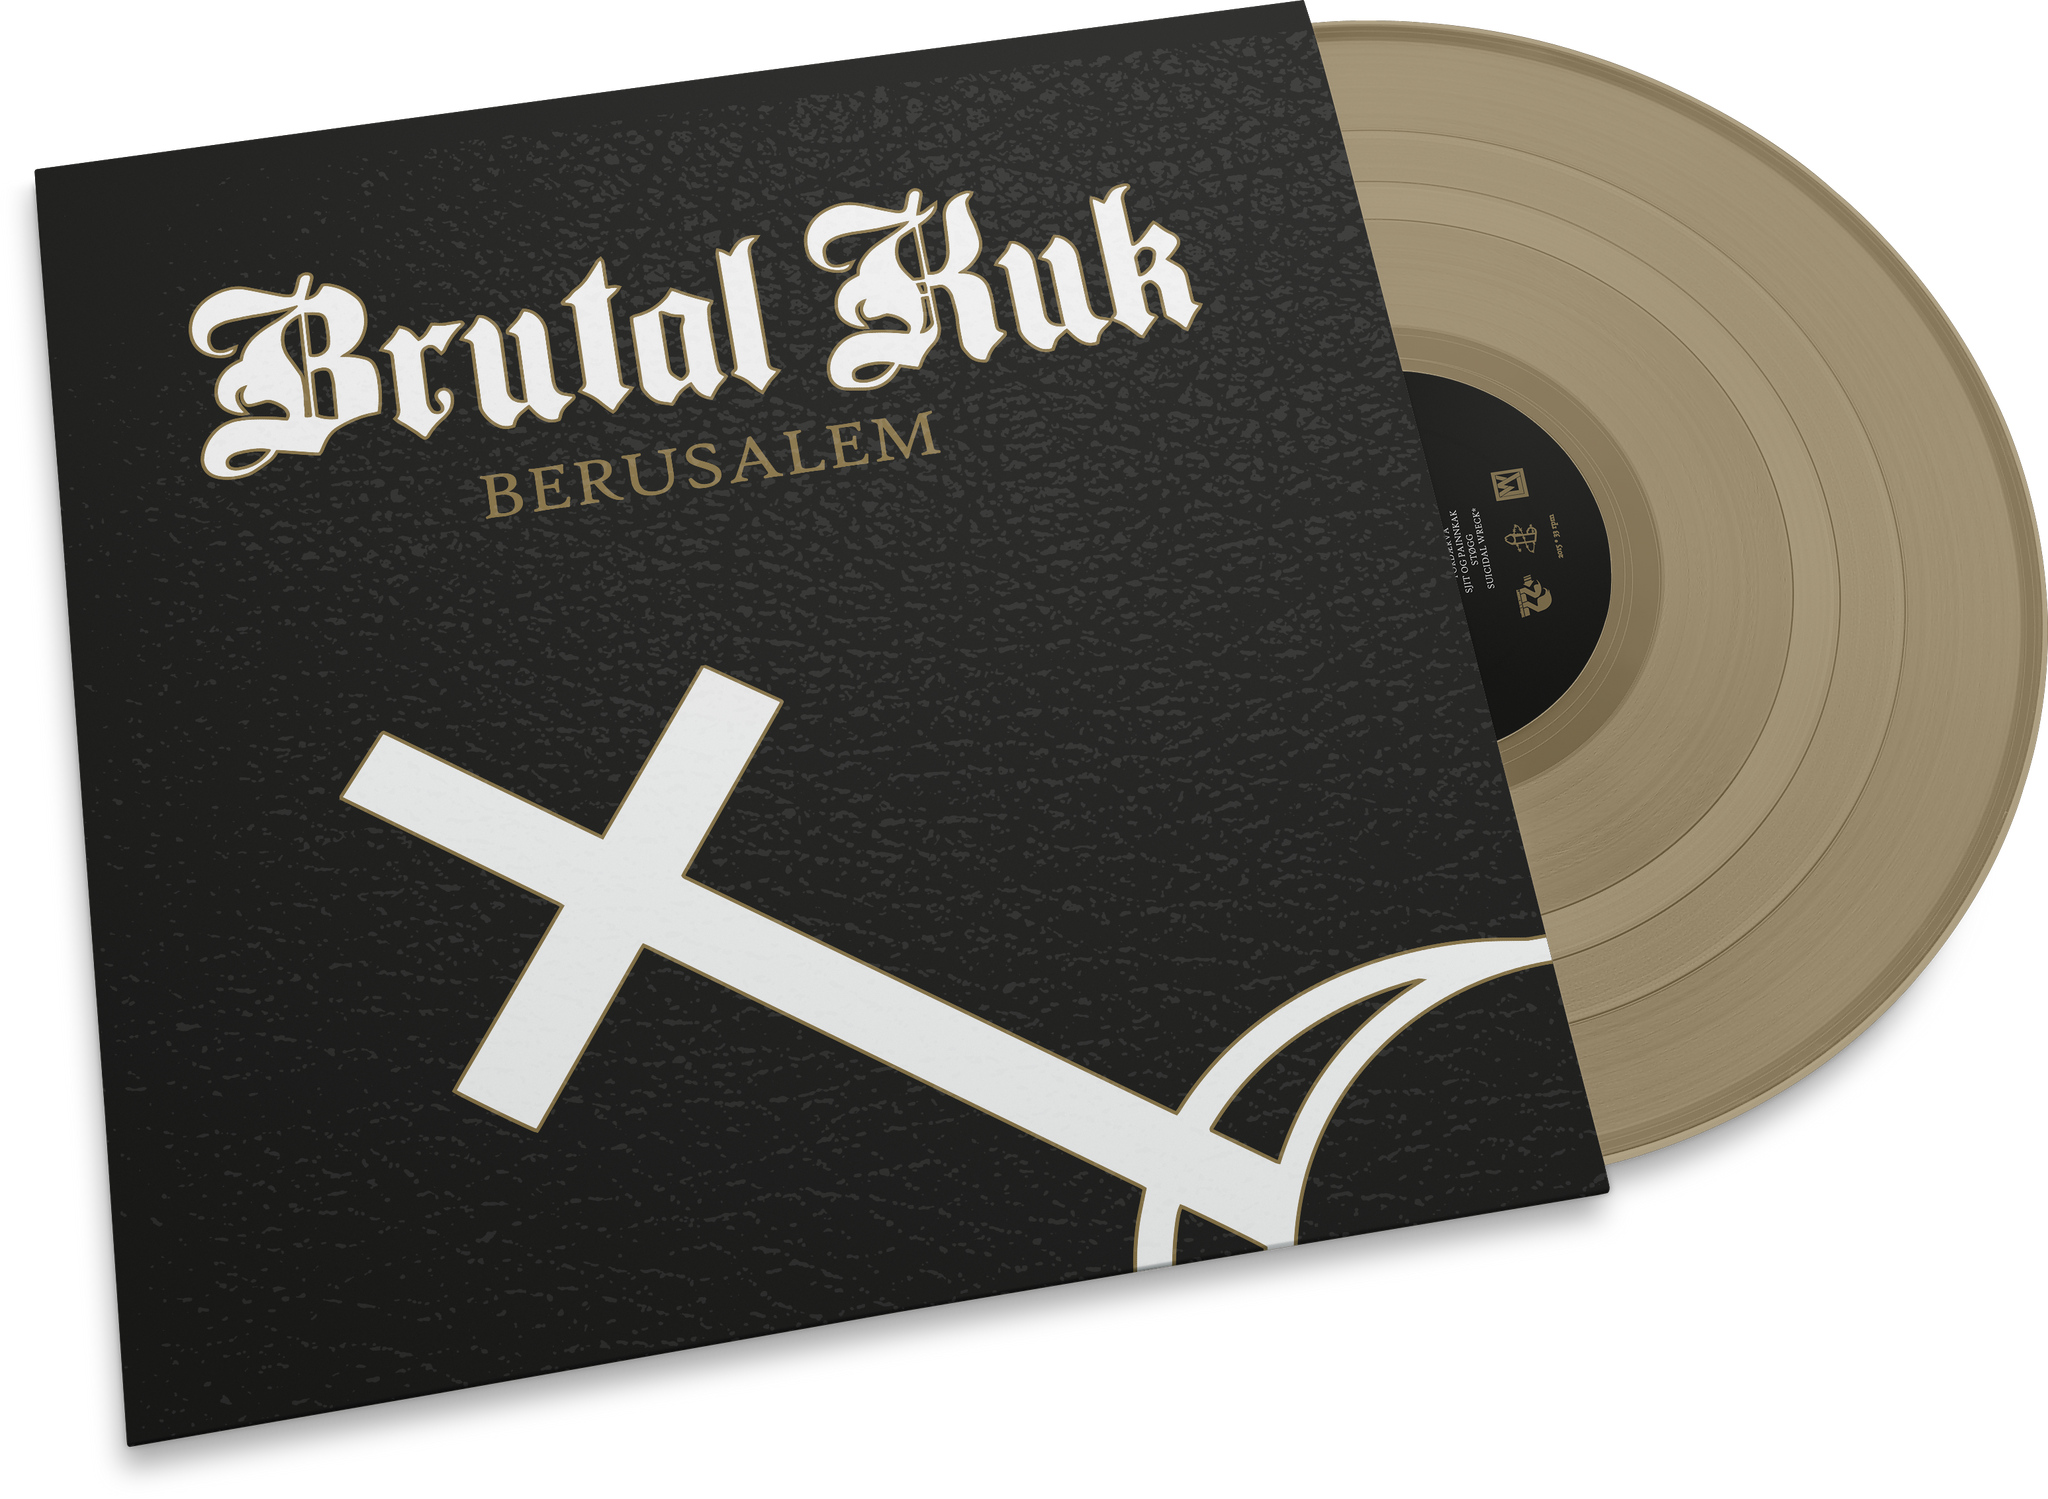 Brutal Kuk - "Berusalem" (LTD Dirty Gold Edition)